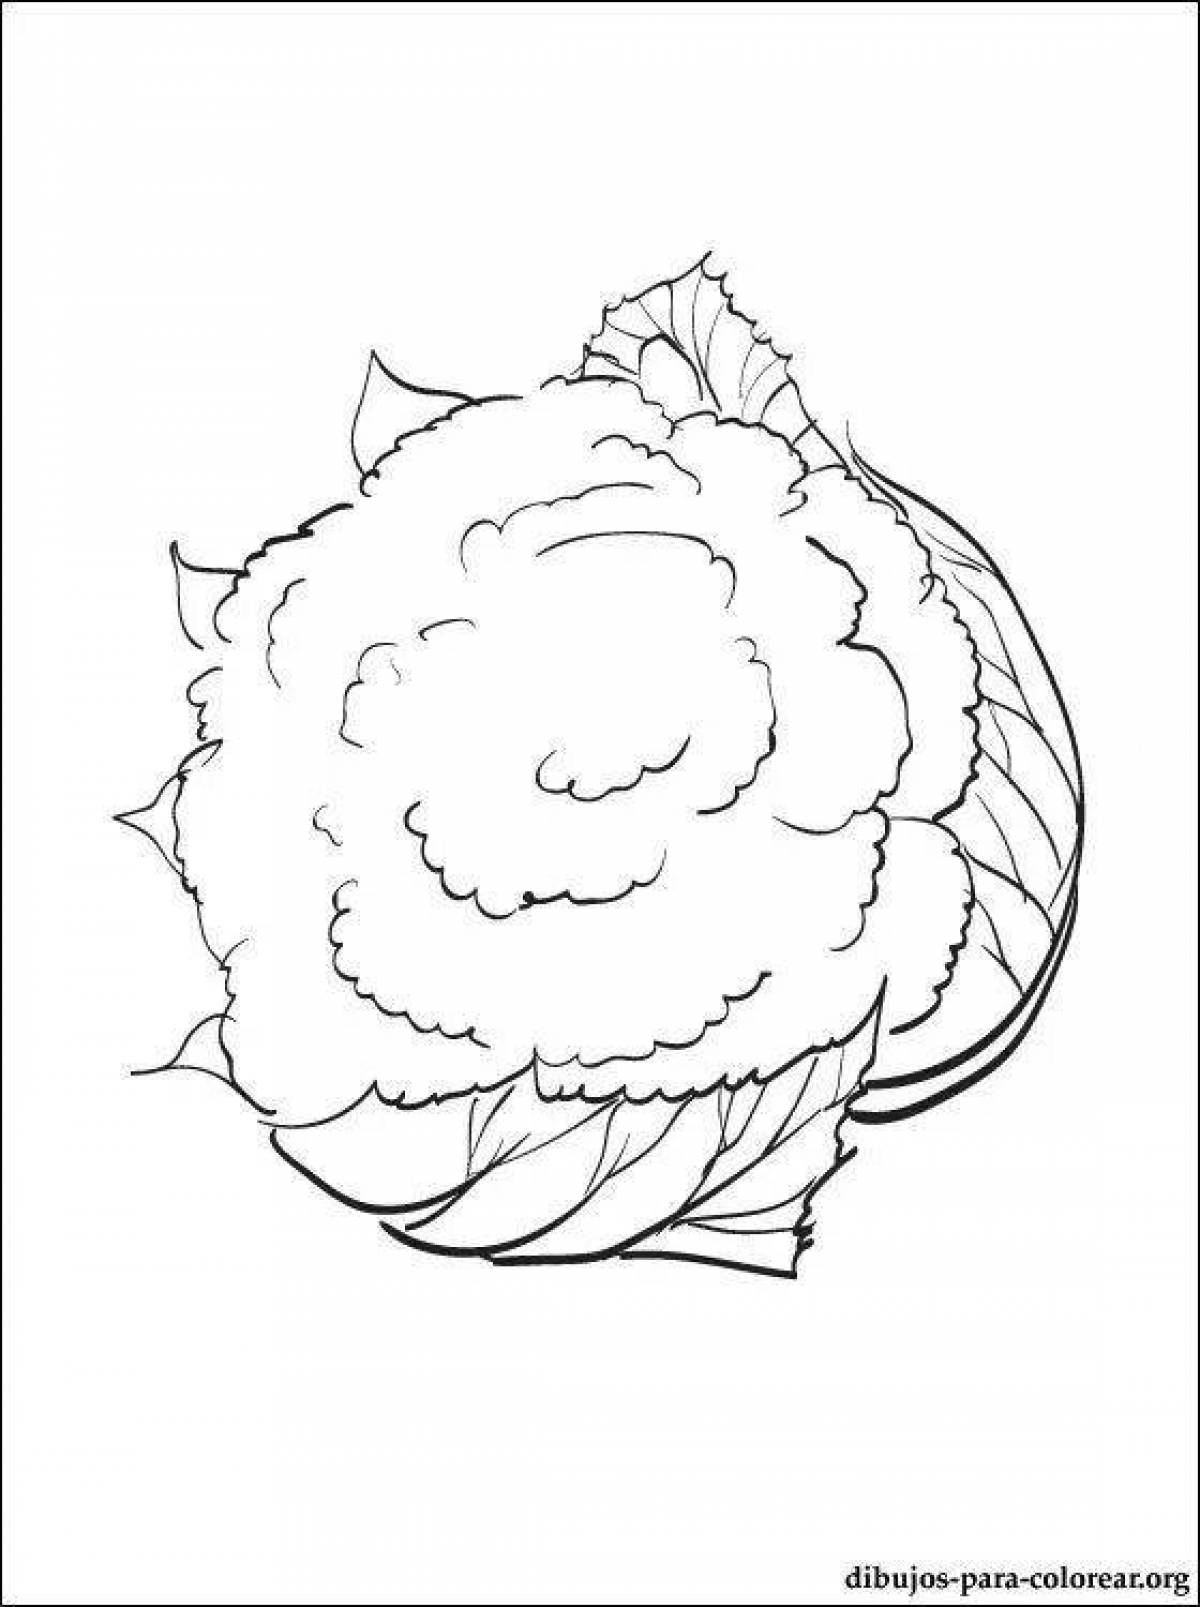 Coloring page joyful cauliflower